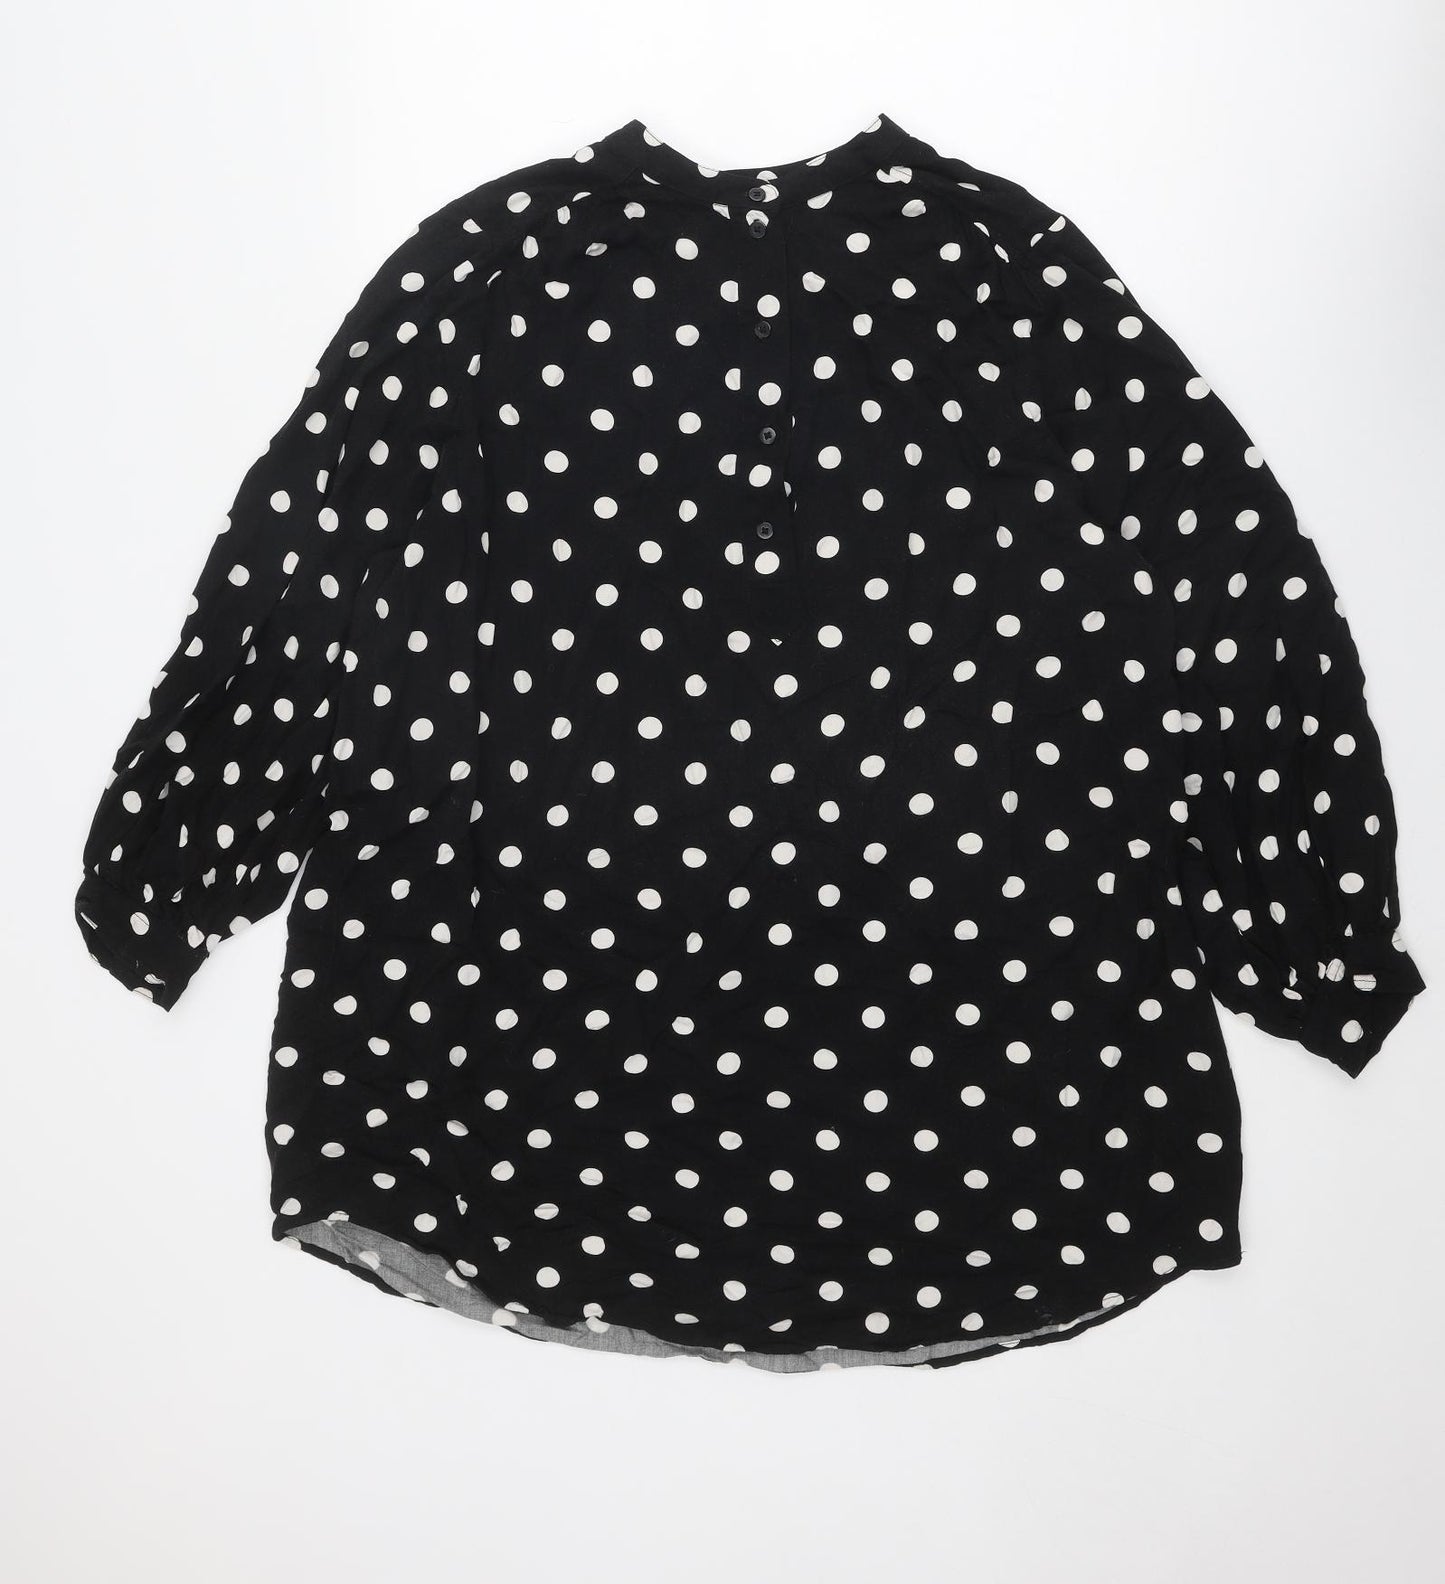 H&M Womens Black Polka Dot Viscose Shirt Dress Size M Round Neck Button